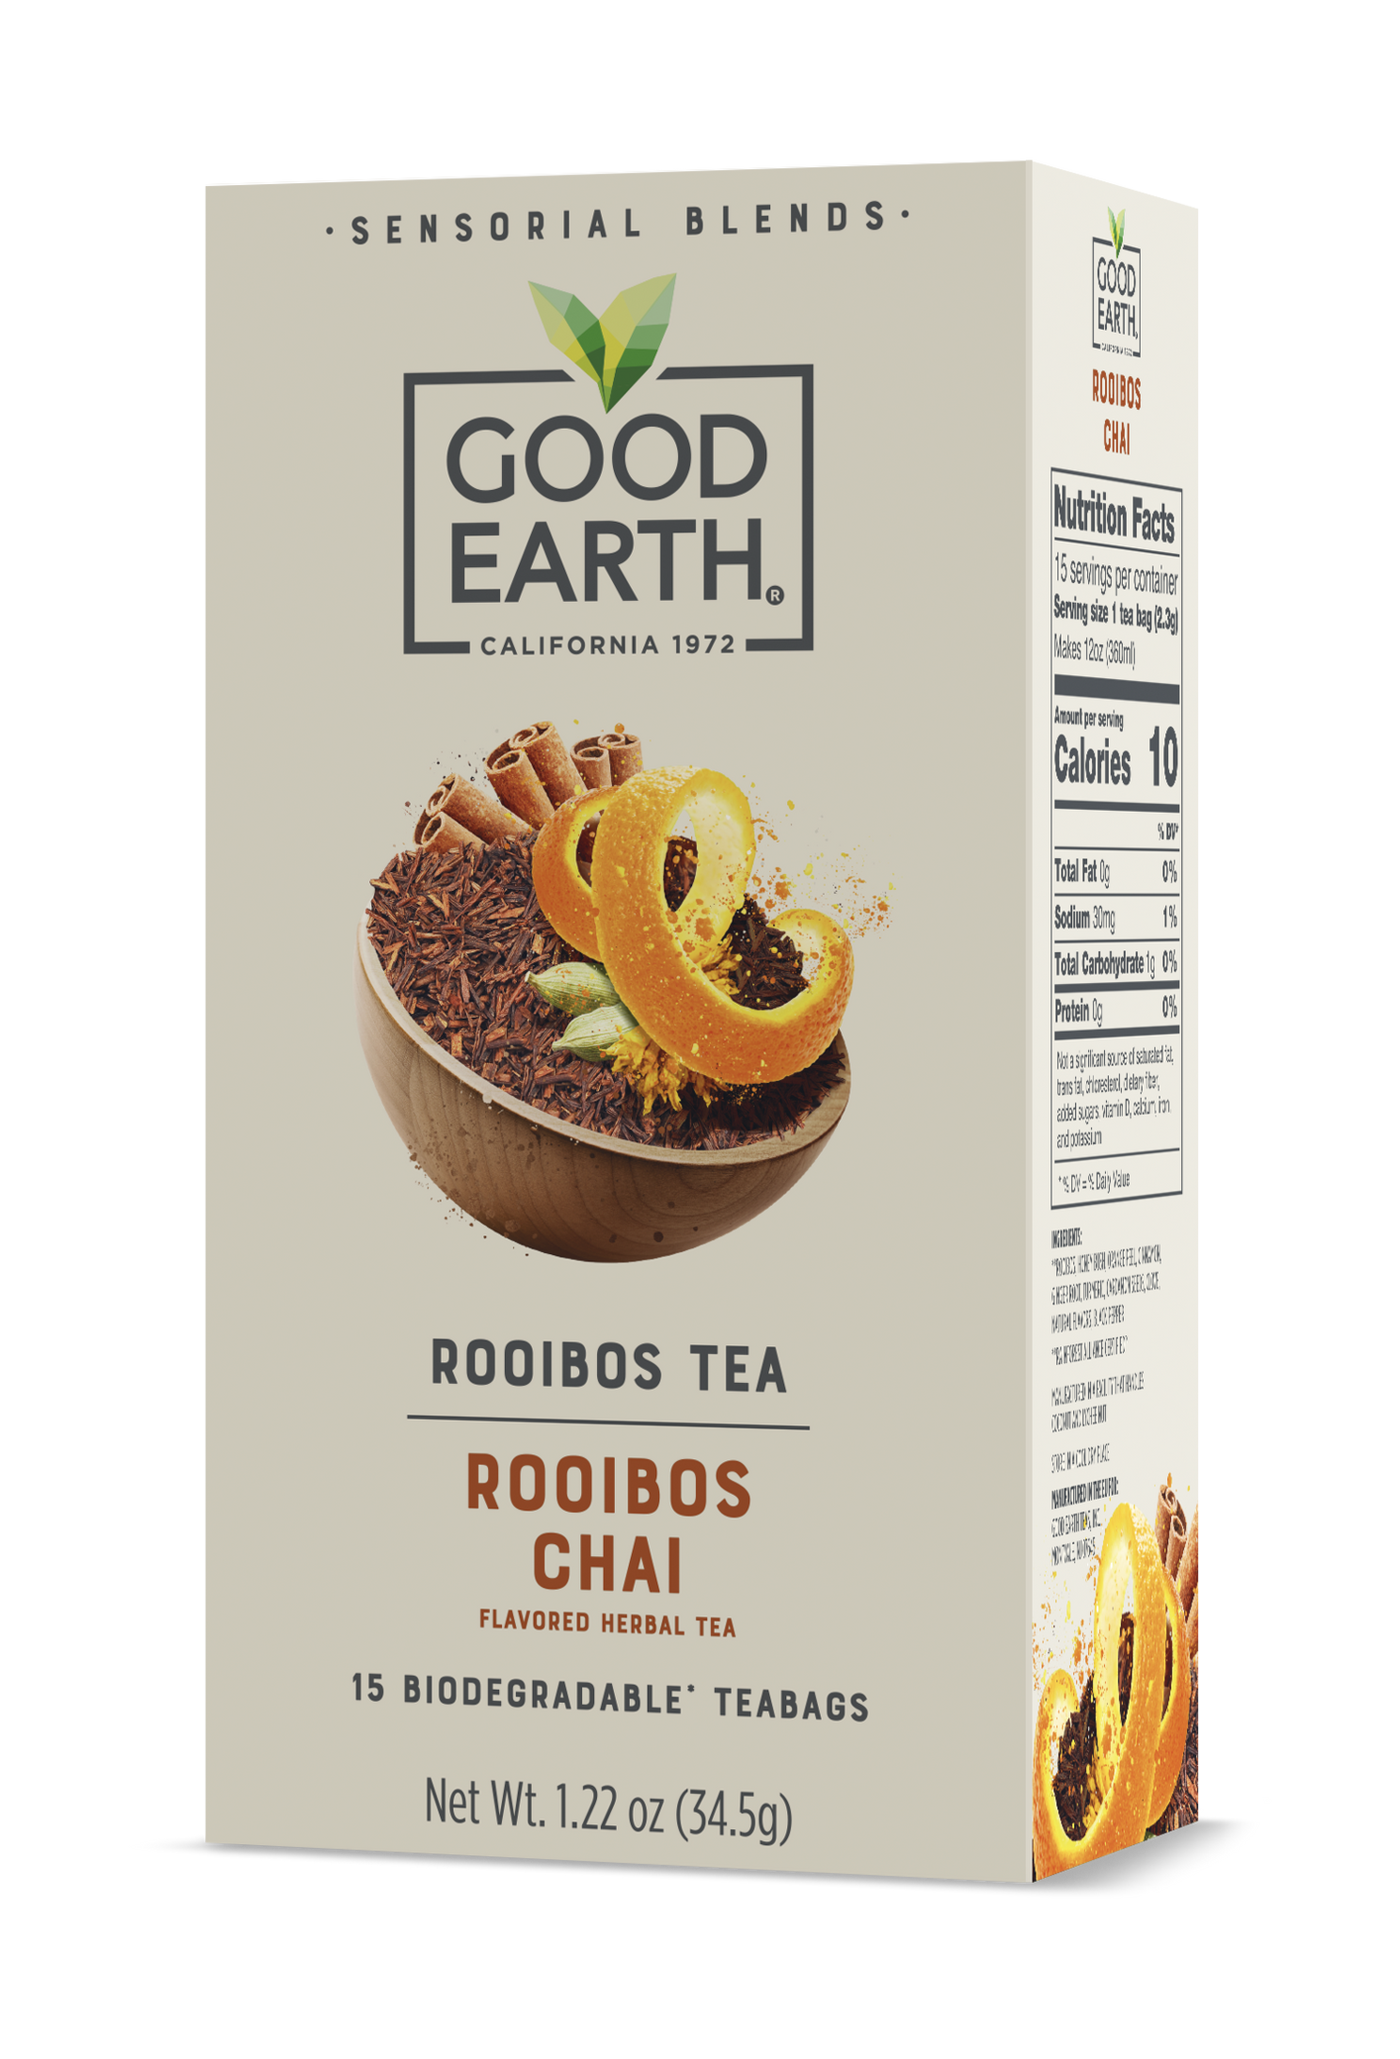 Rooibos Chai packaging